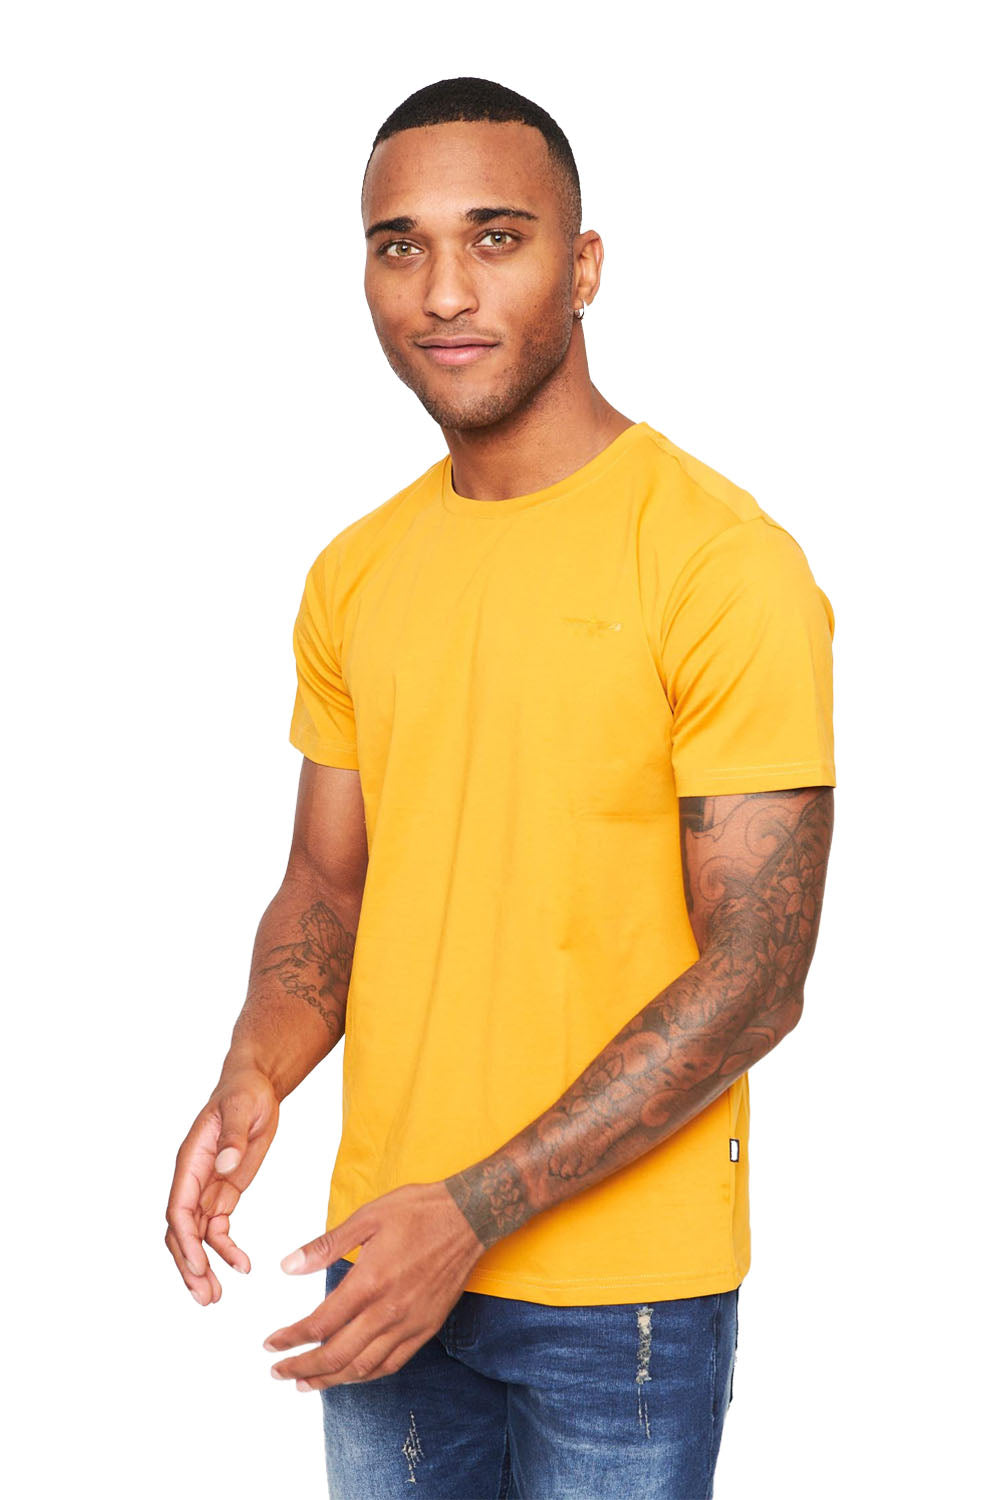 BARABAS Men's Basic Solid Color Crew-neck T-shirts ST933 light mustard